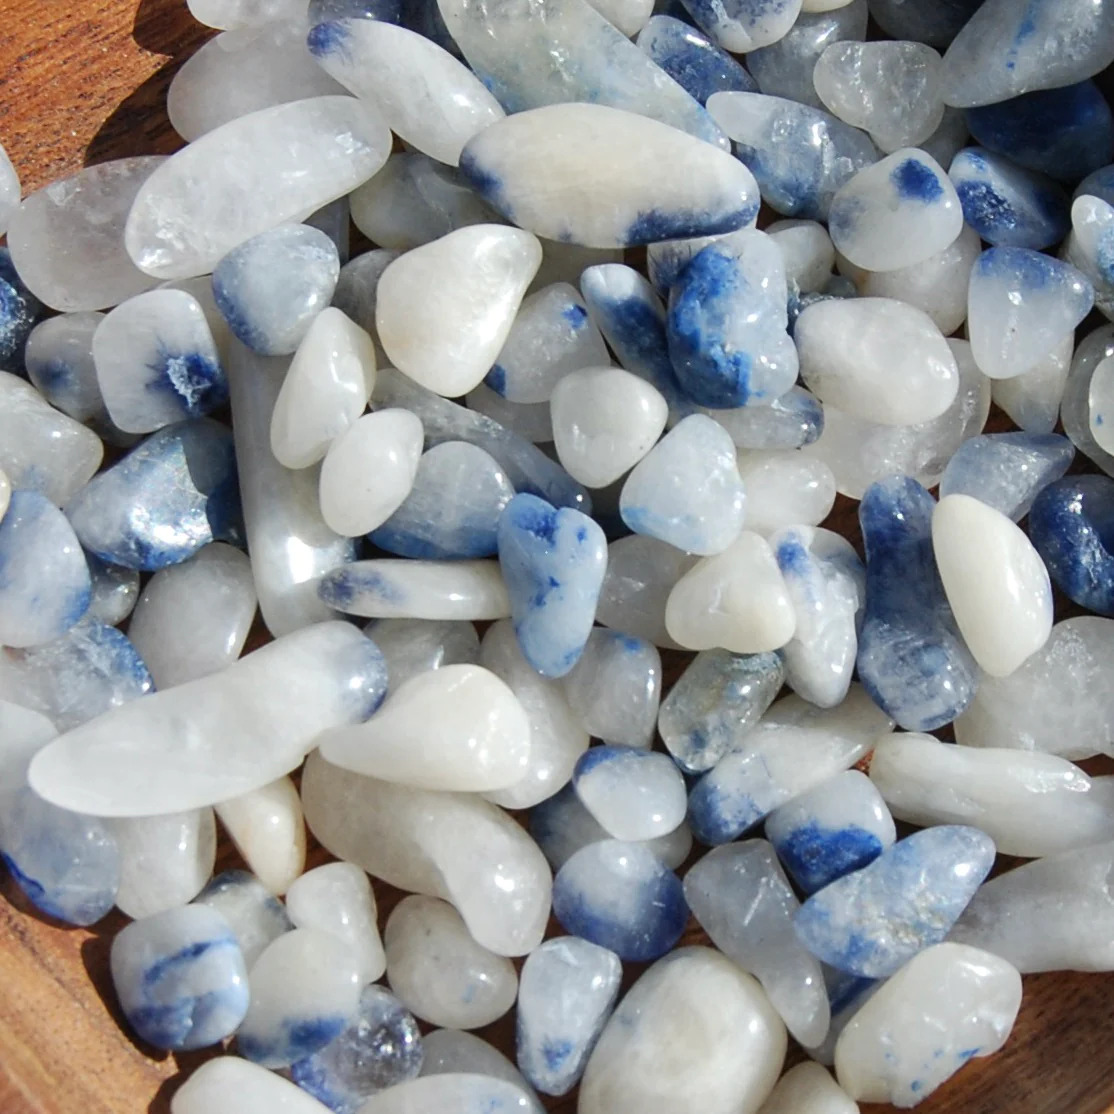 20-25pcs Blue Dumortierite in Quartz Crystal Tumbled Stones, Extra Small Super F